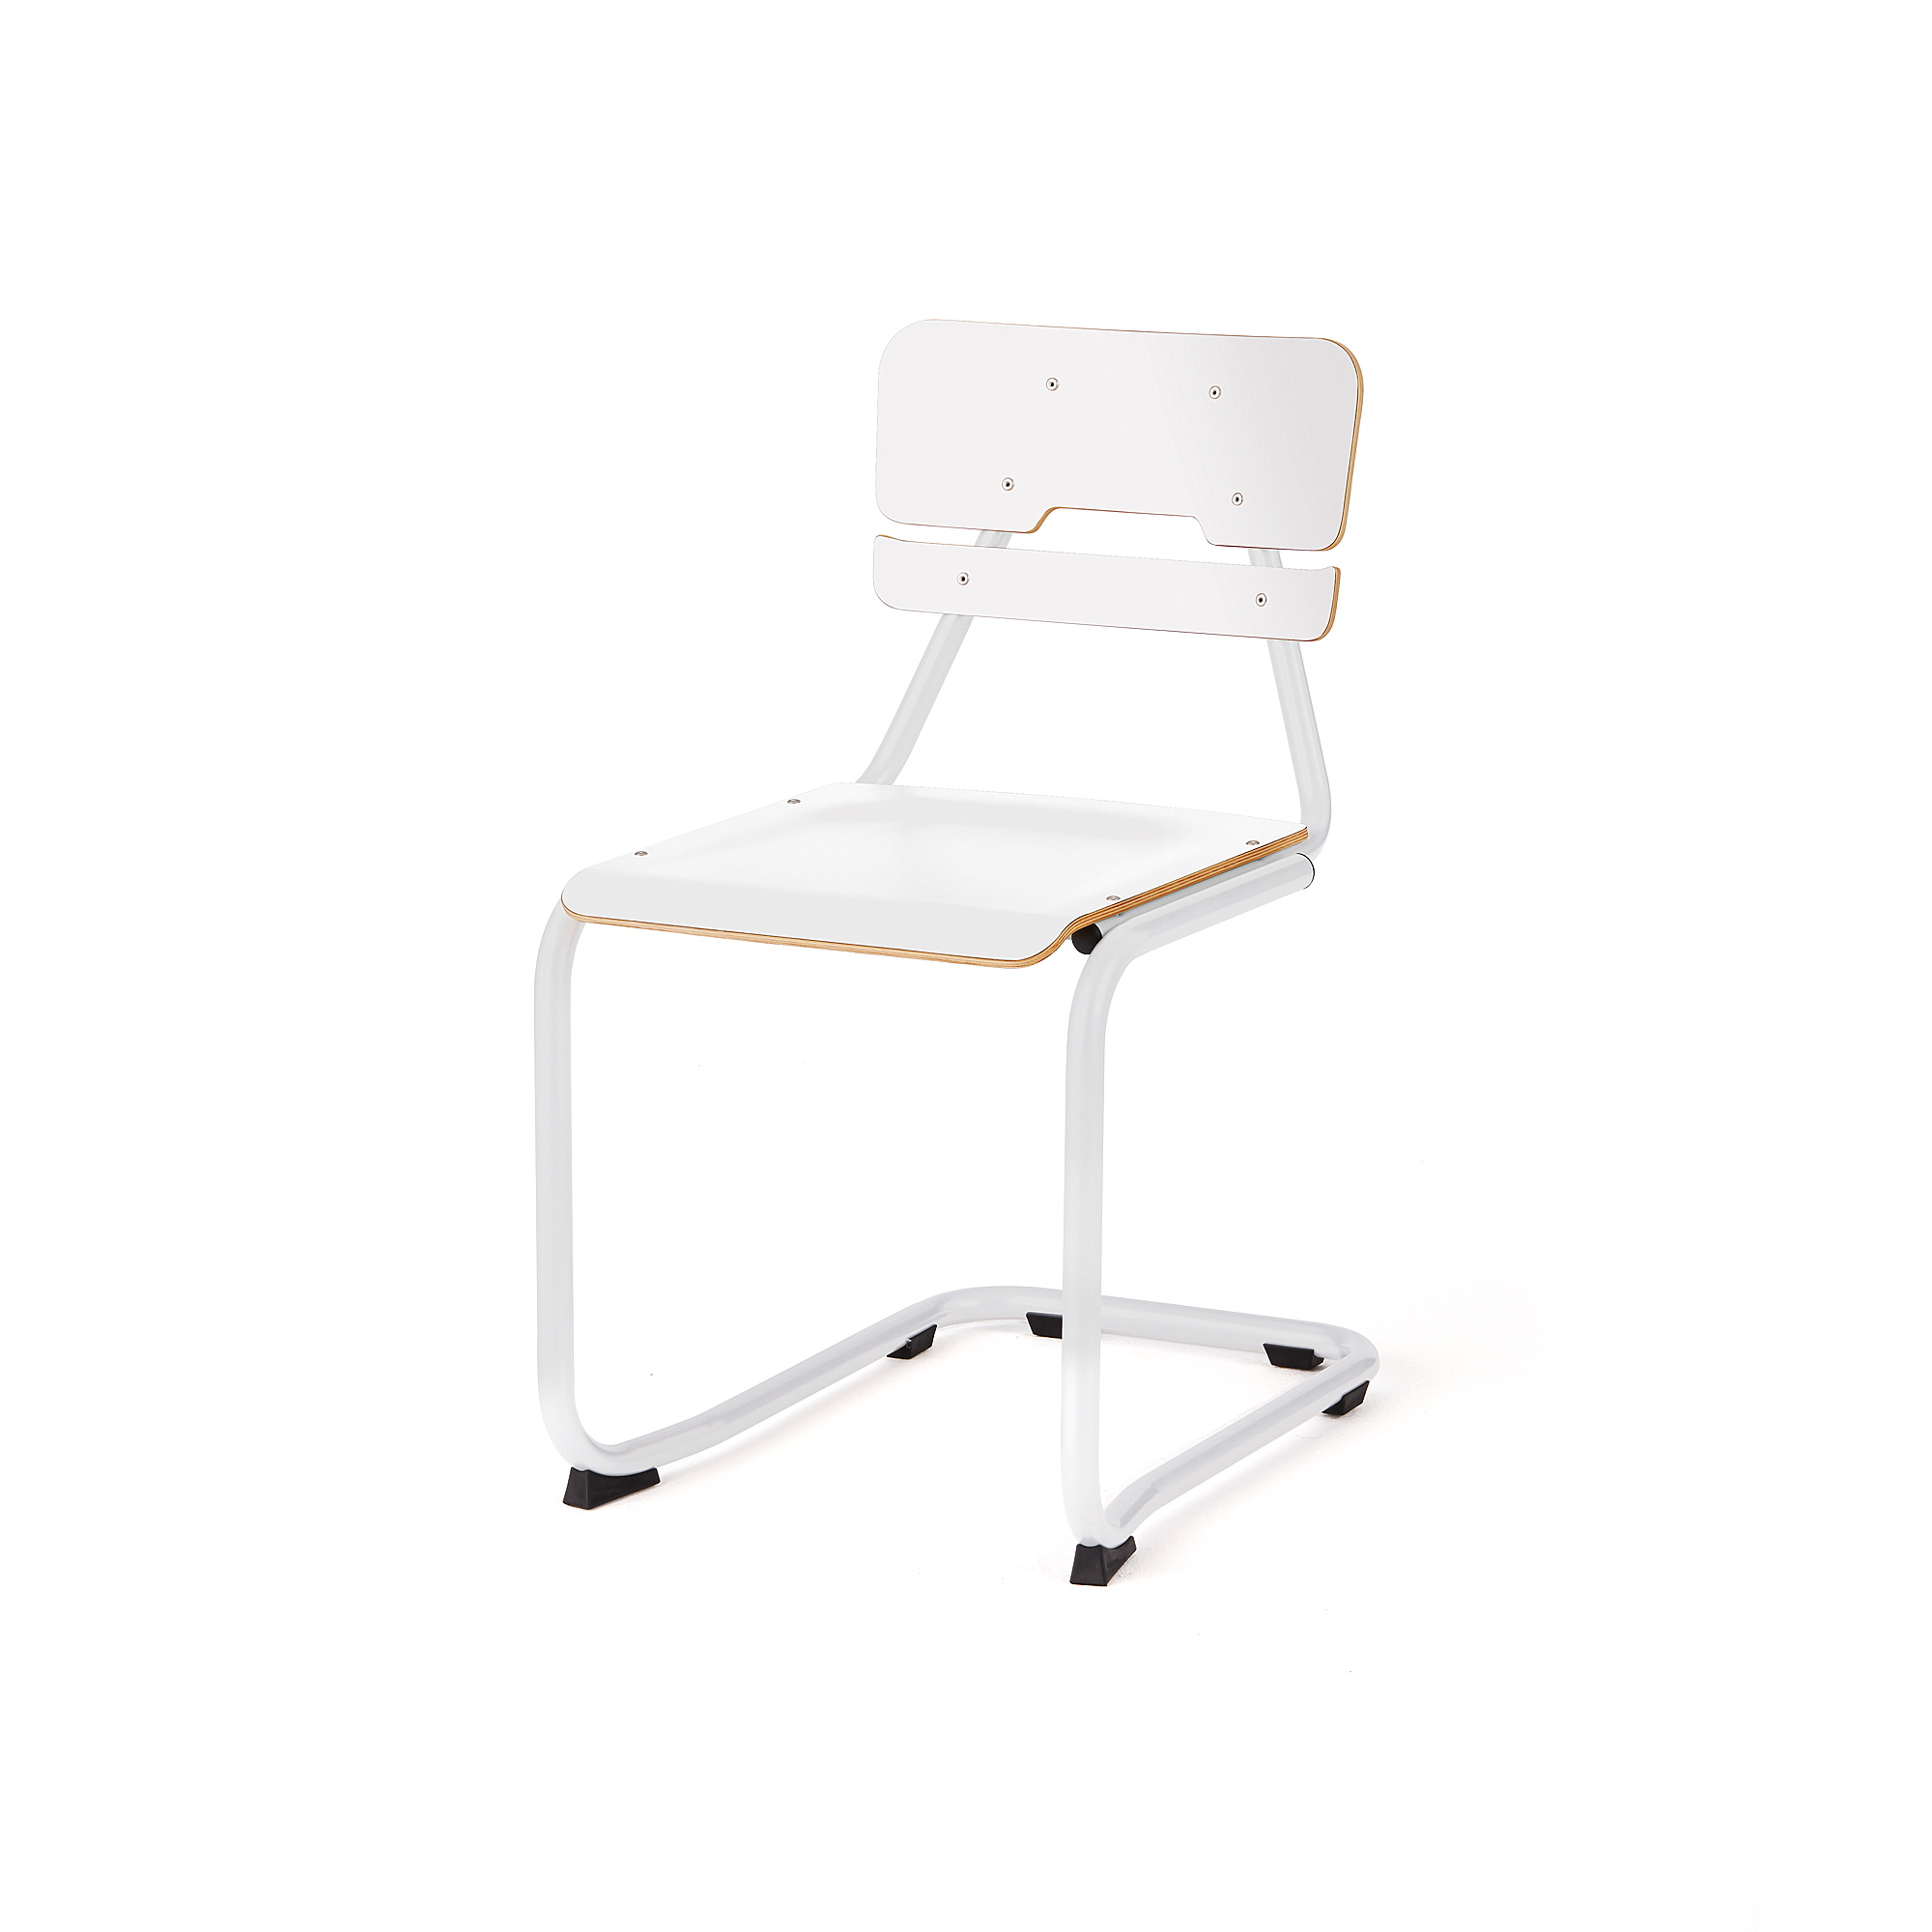 Školní židle LEGERE II, výška 450 mm, bílá, bílá